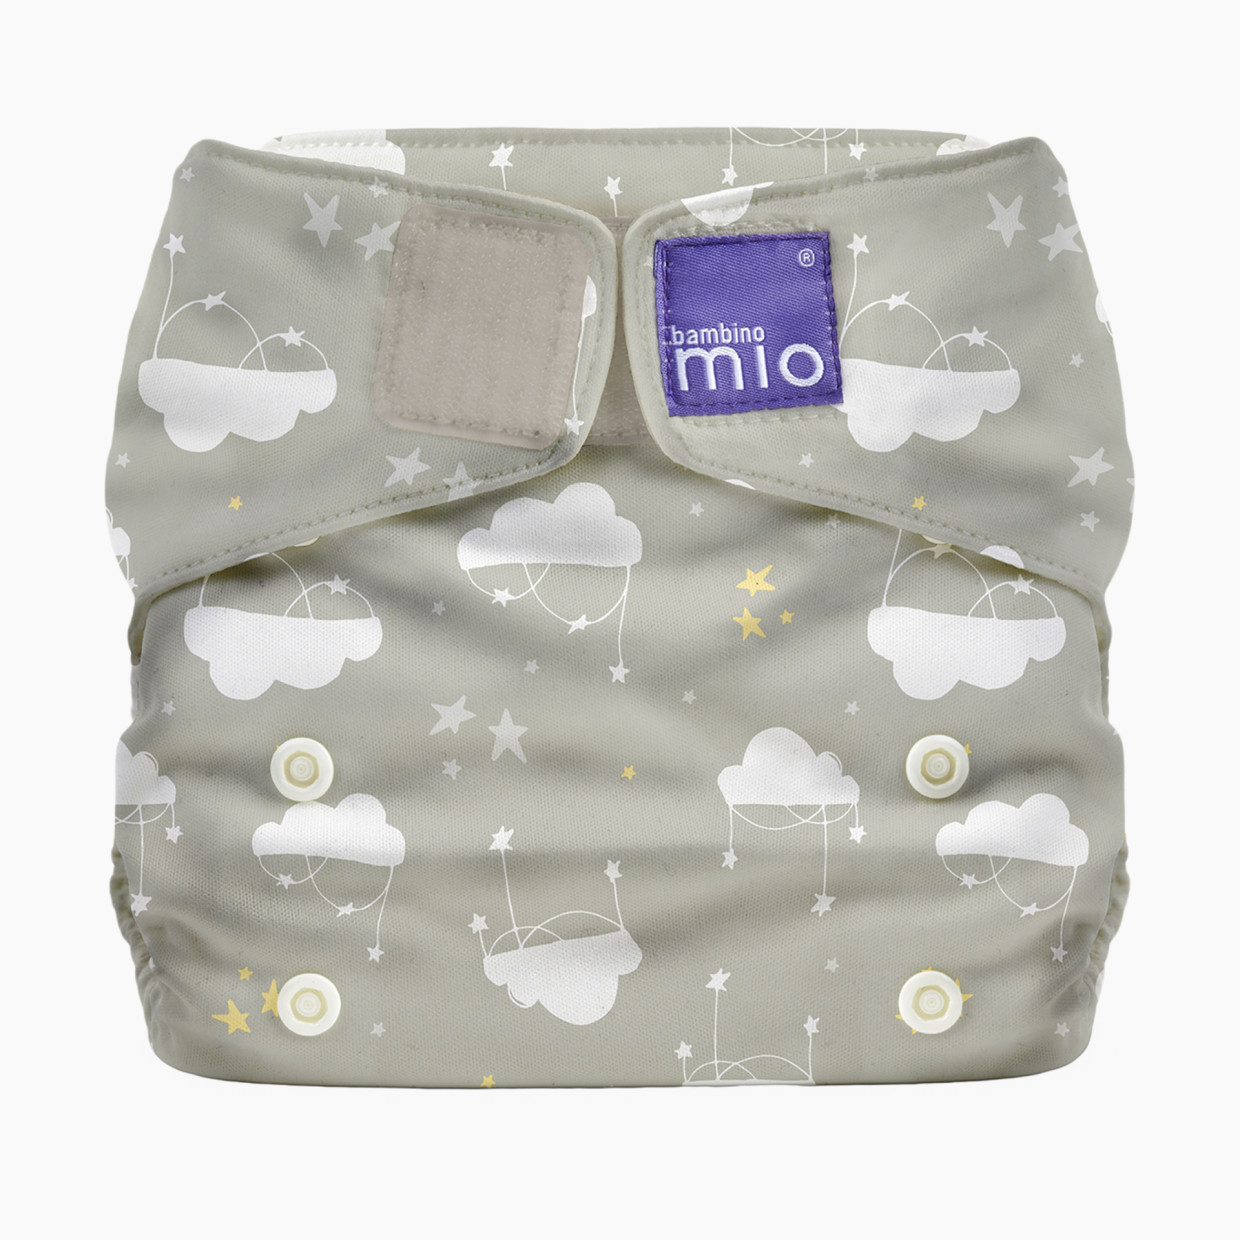 Bambino Mio Miosolo Classic Cloth Diaper - Cloud Nine, One Size (8-35 Lbs).